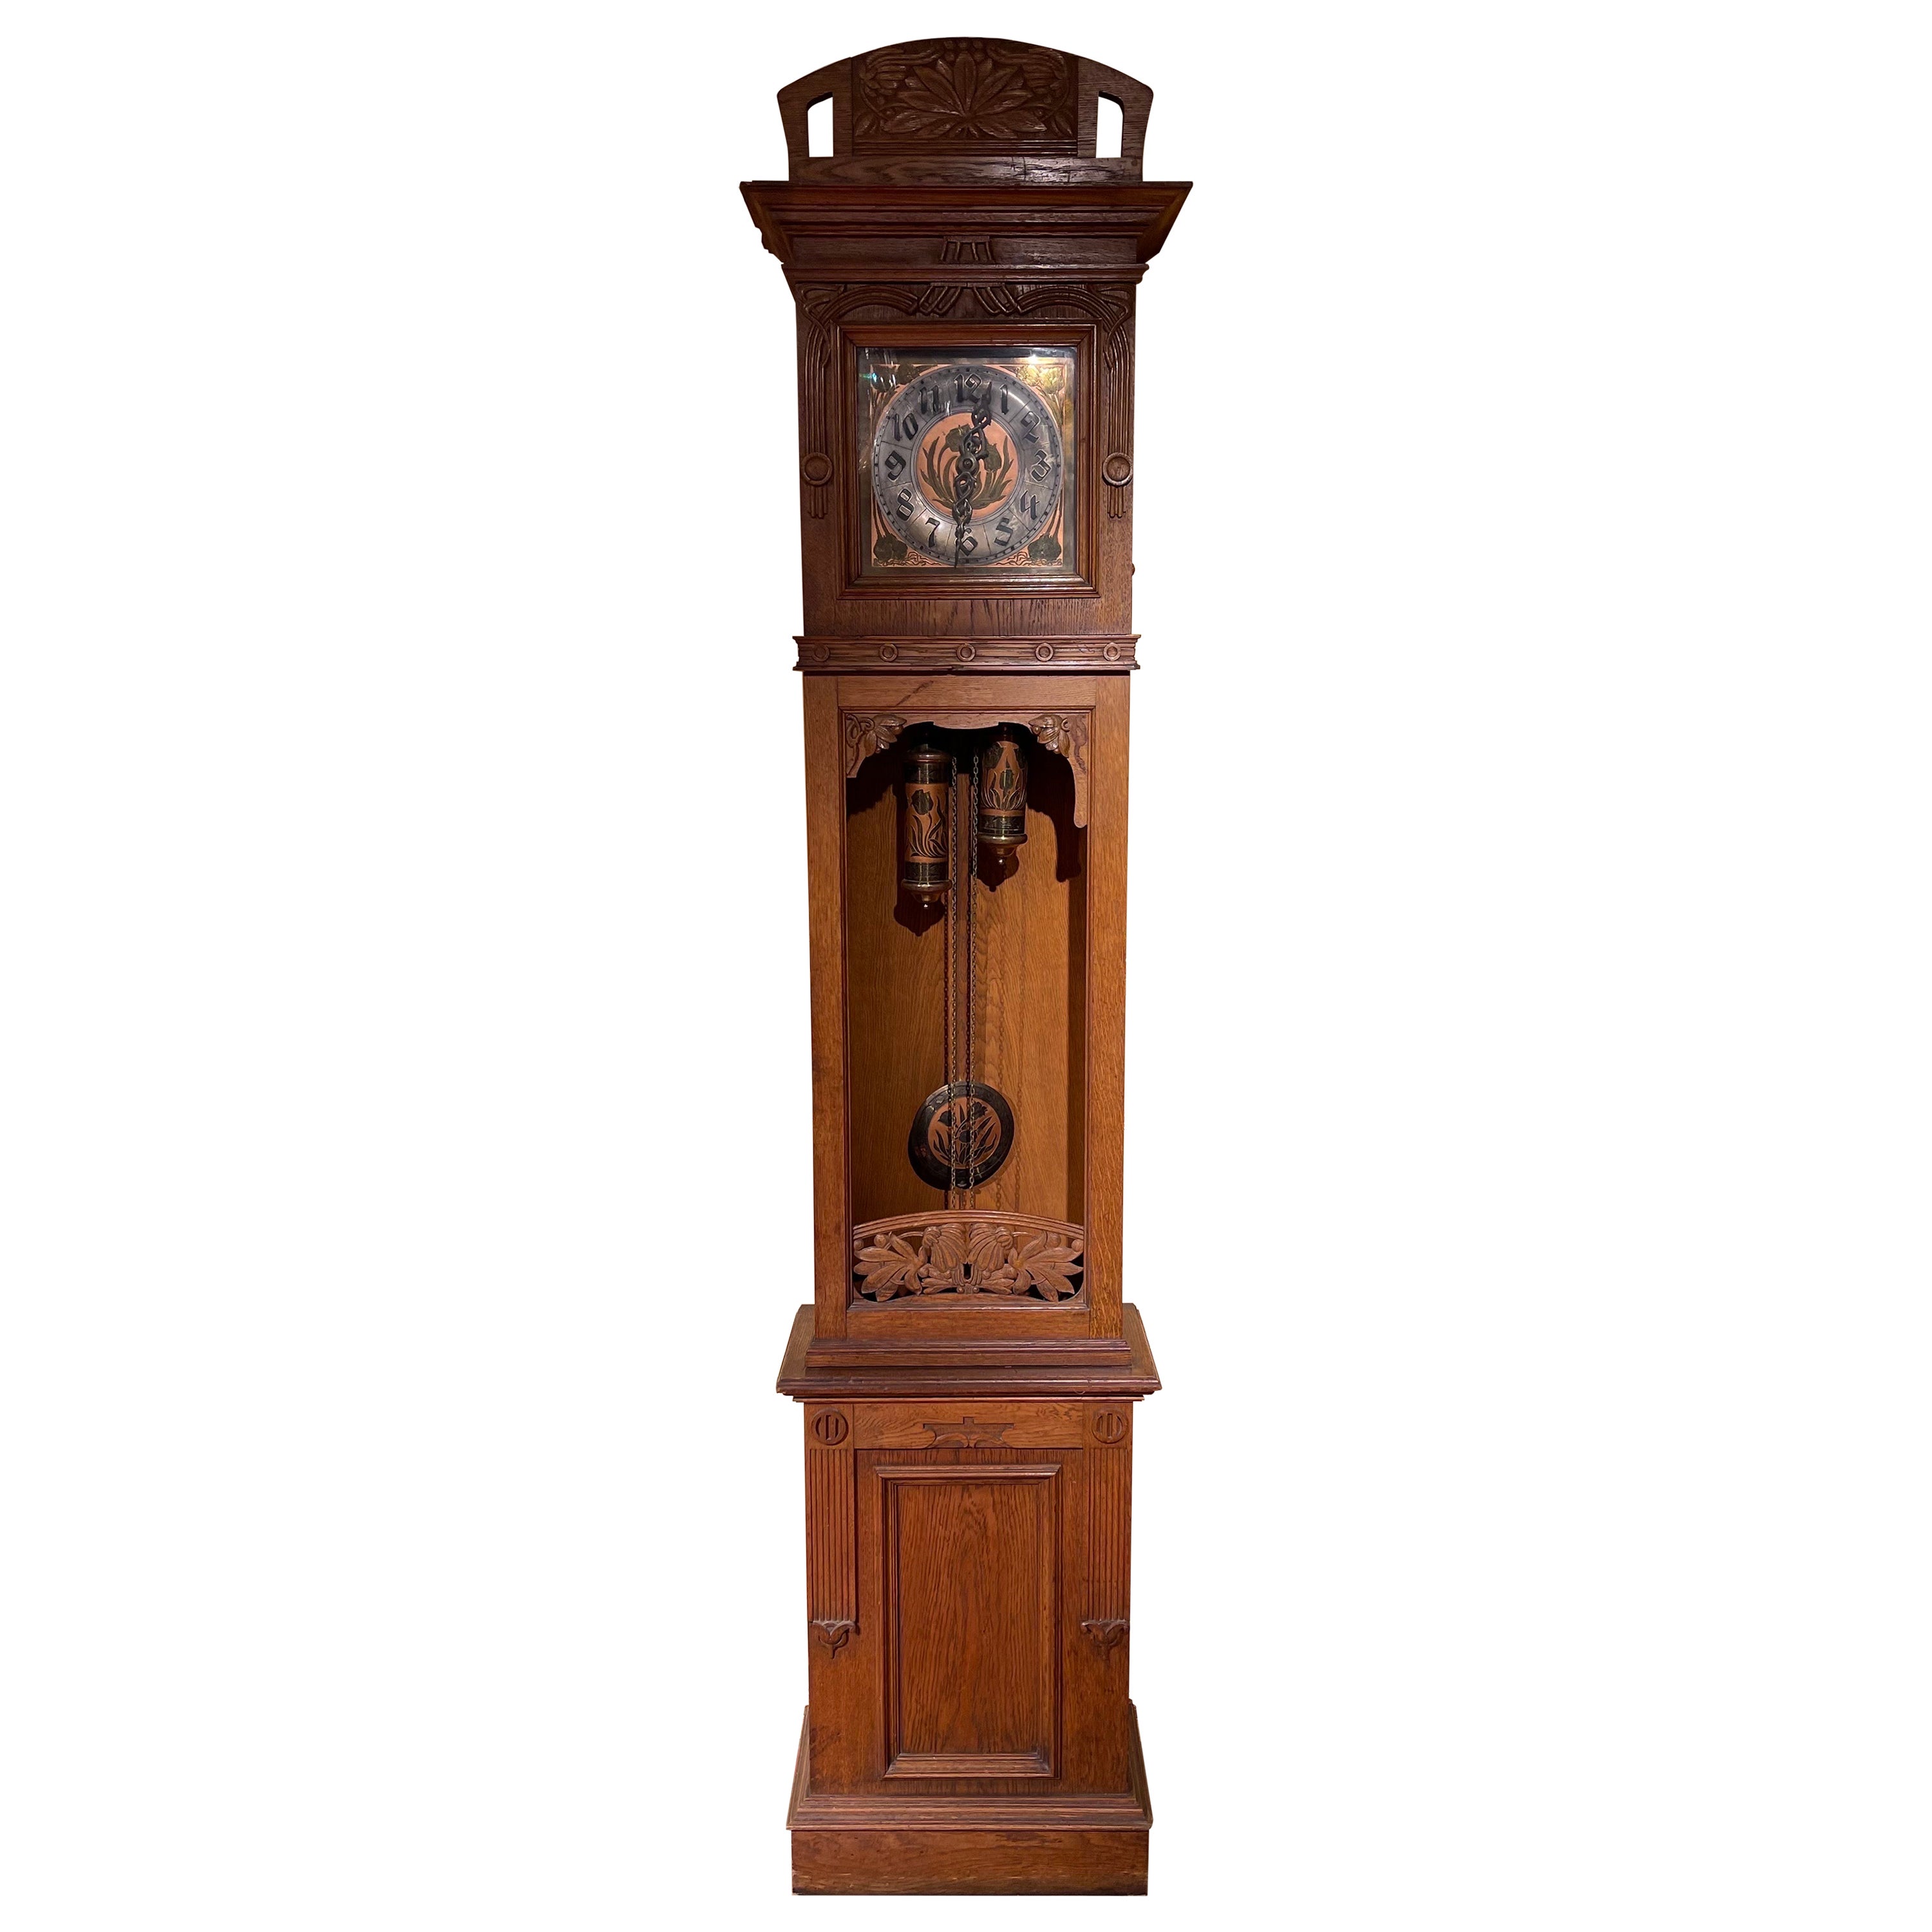 Antique Art Nouveau Grandfather Clock, Germany, 1900